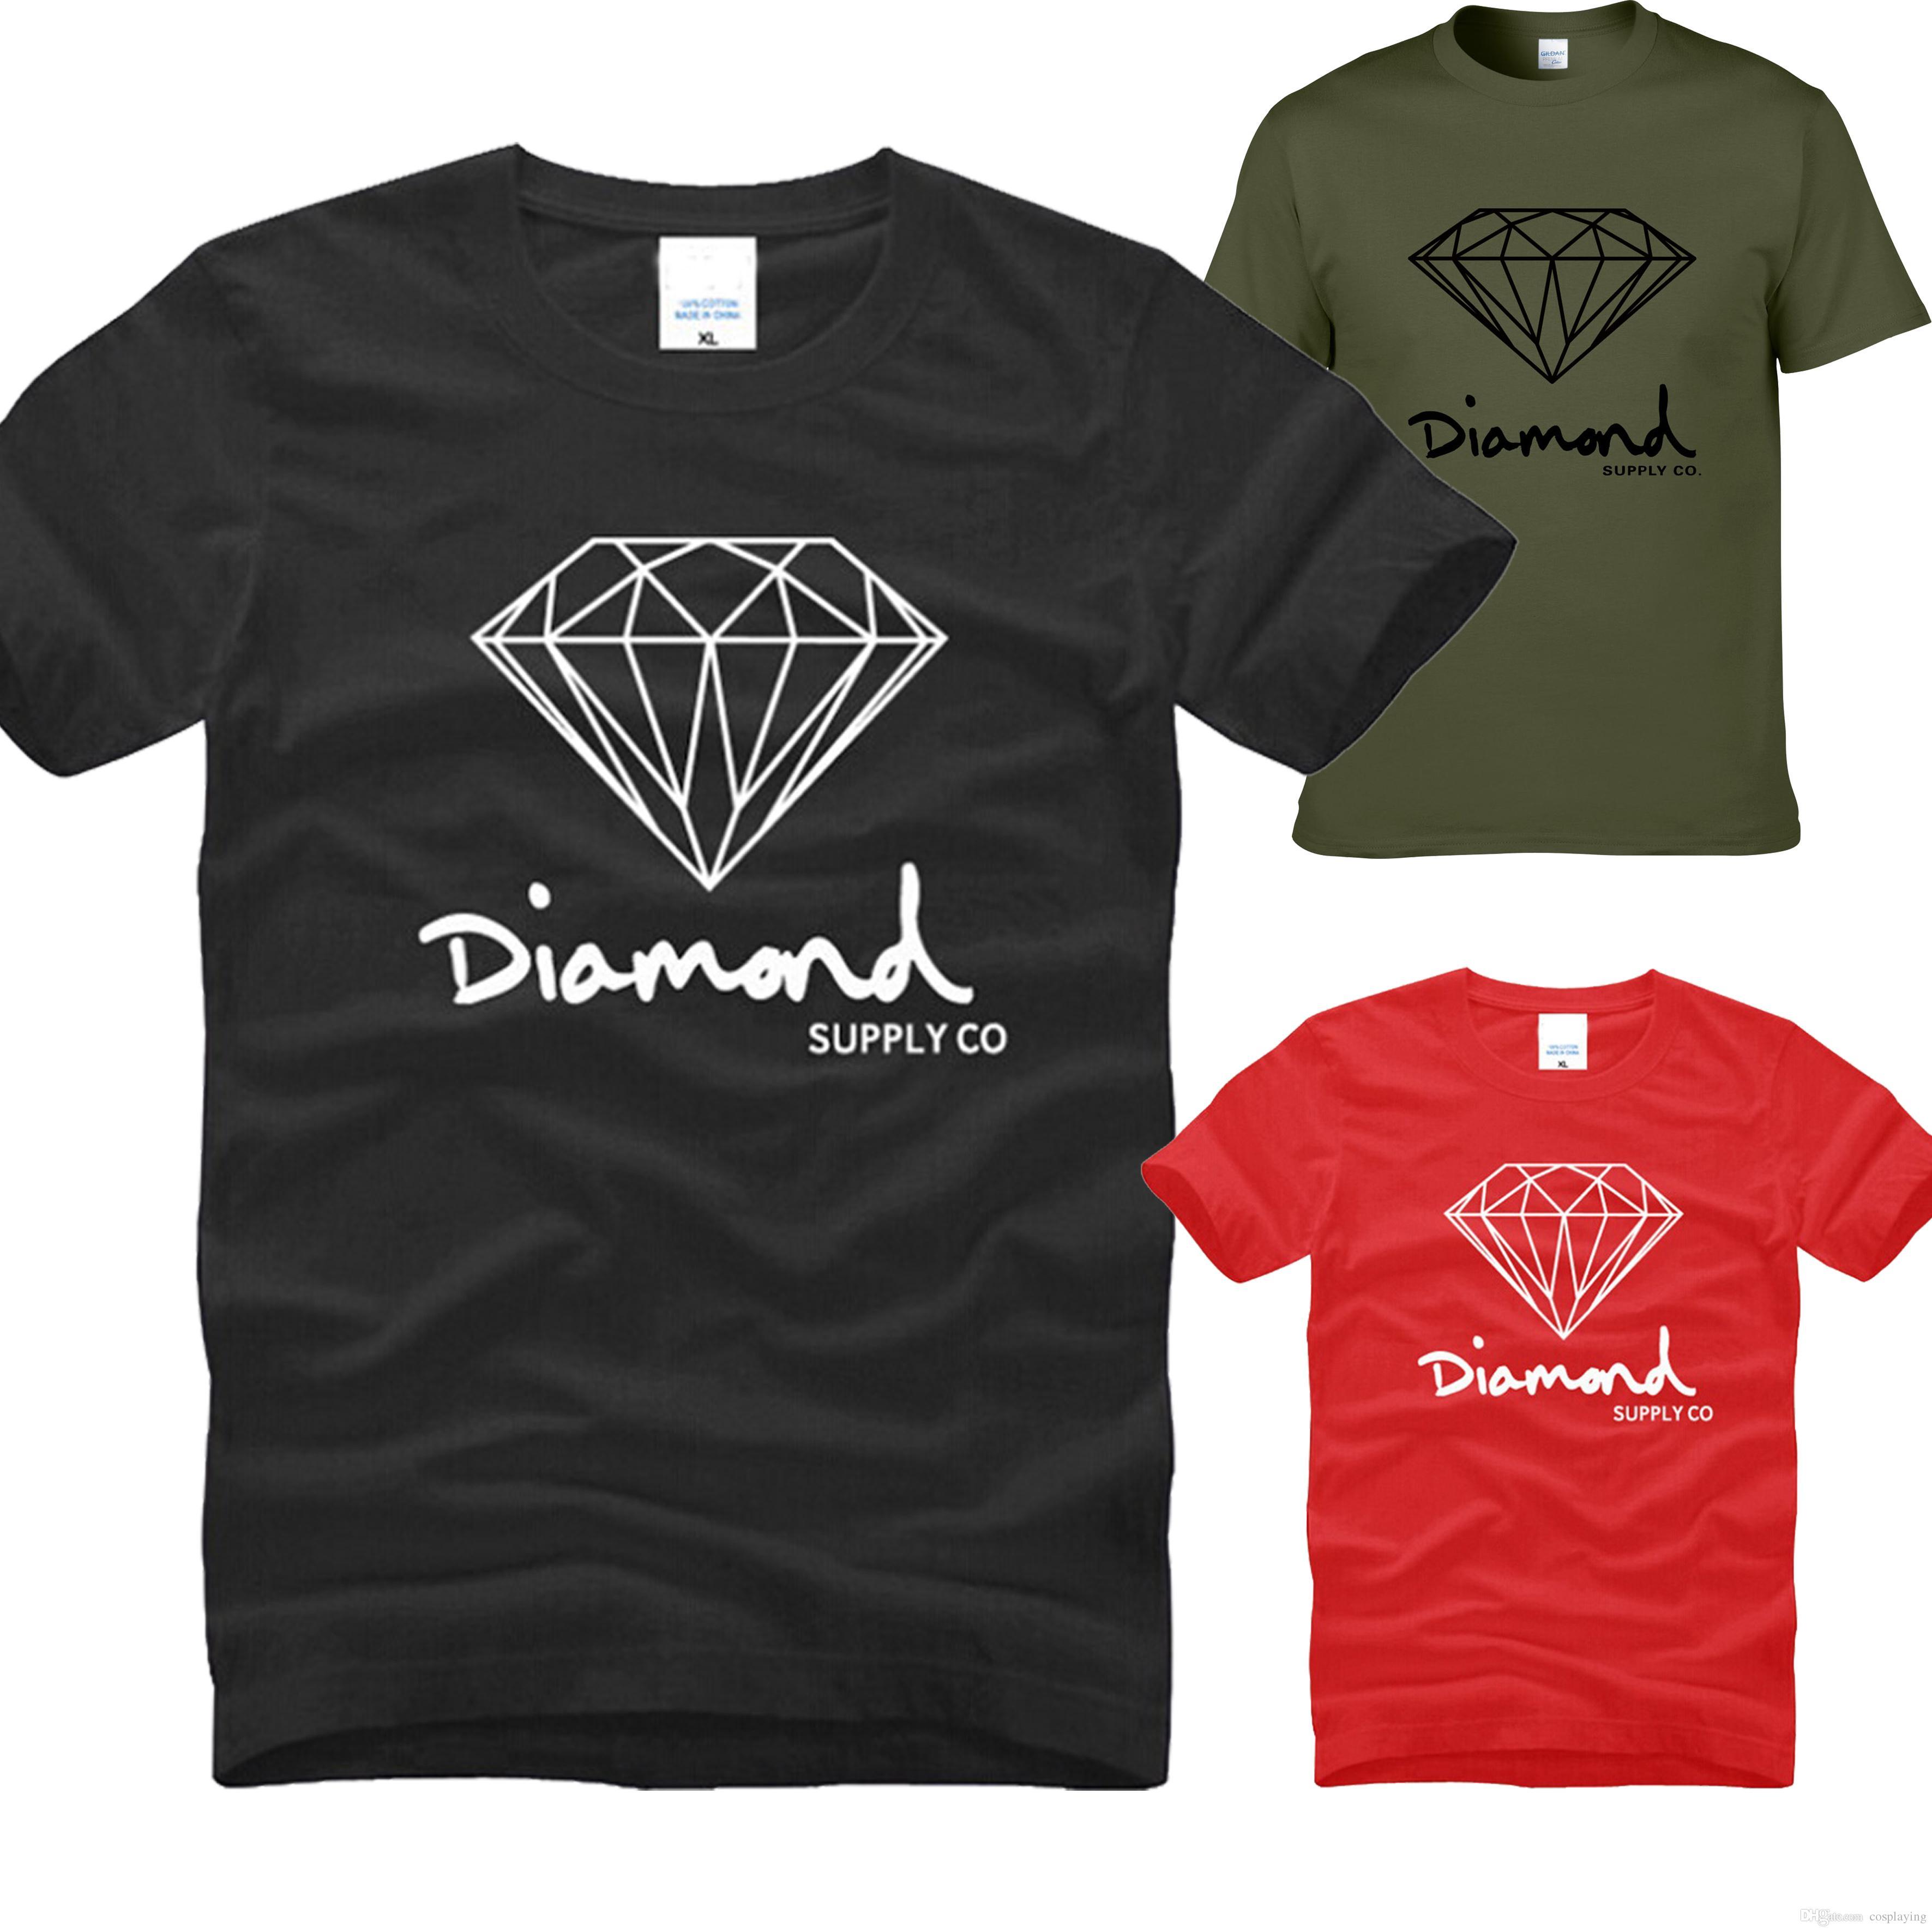 Diamond Supply Co Clothing Logo - Diamond Supply Co Printed T Shirt Men'S Fashion Brand Design Clothes ...